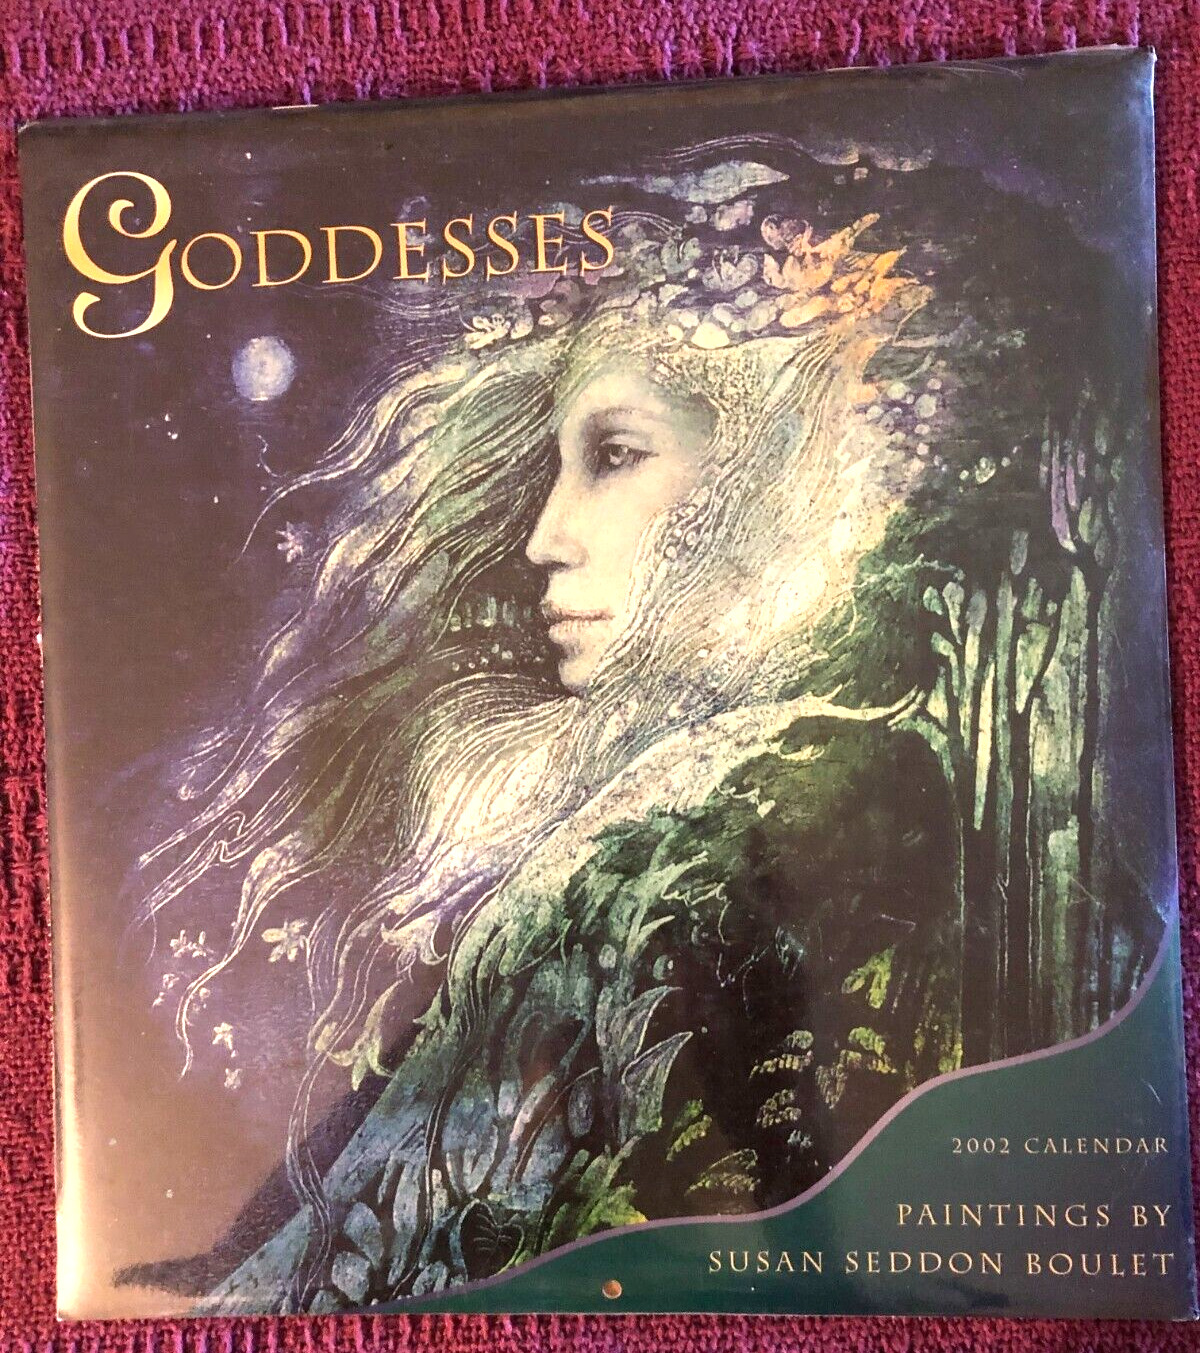 Goddesses 2002 Calendar Paintings by Susan Seddon Boulet-New In Package